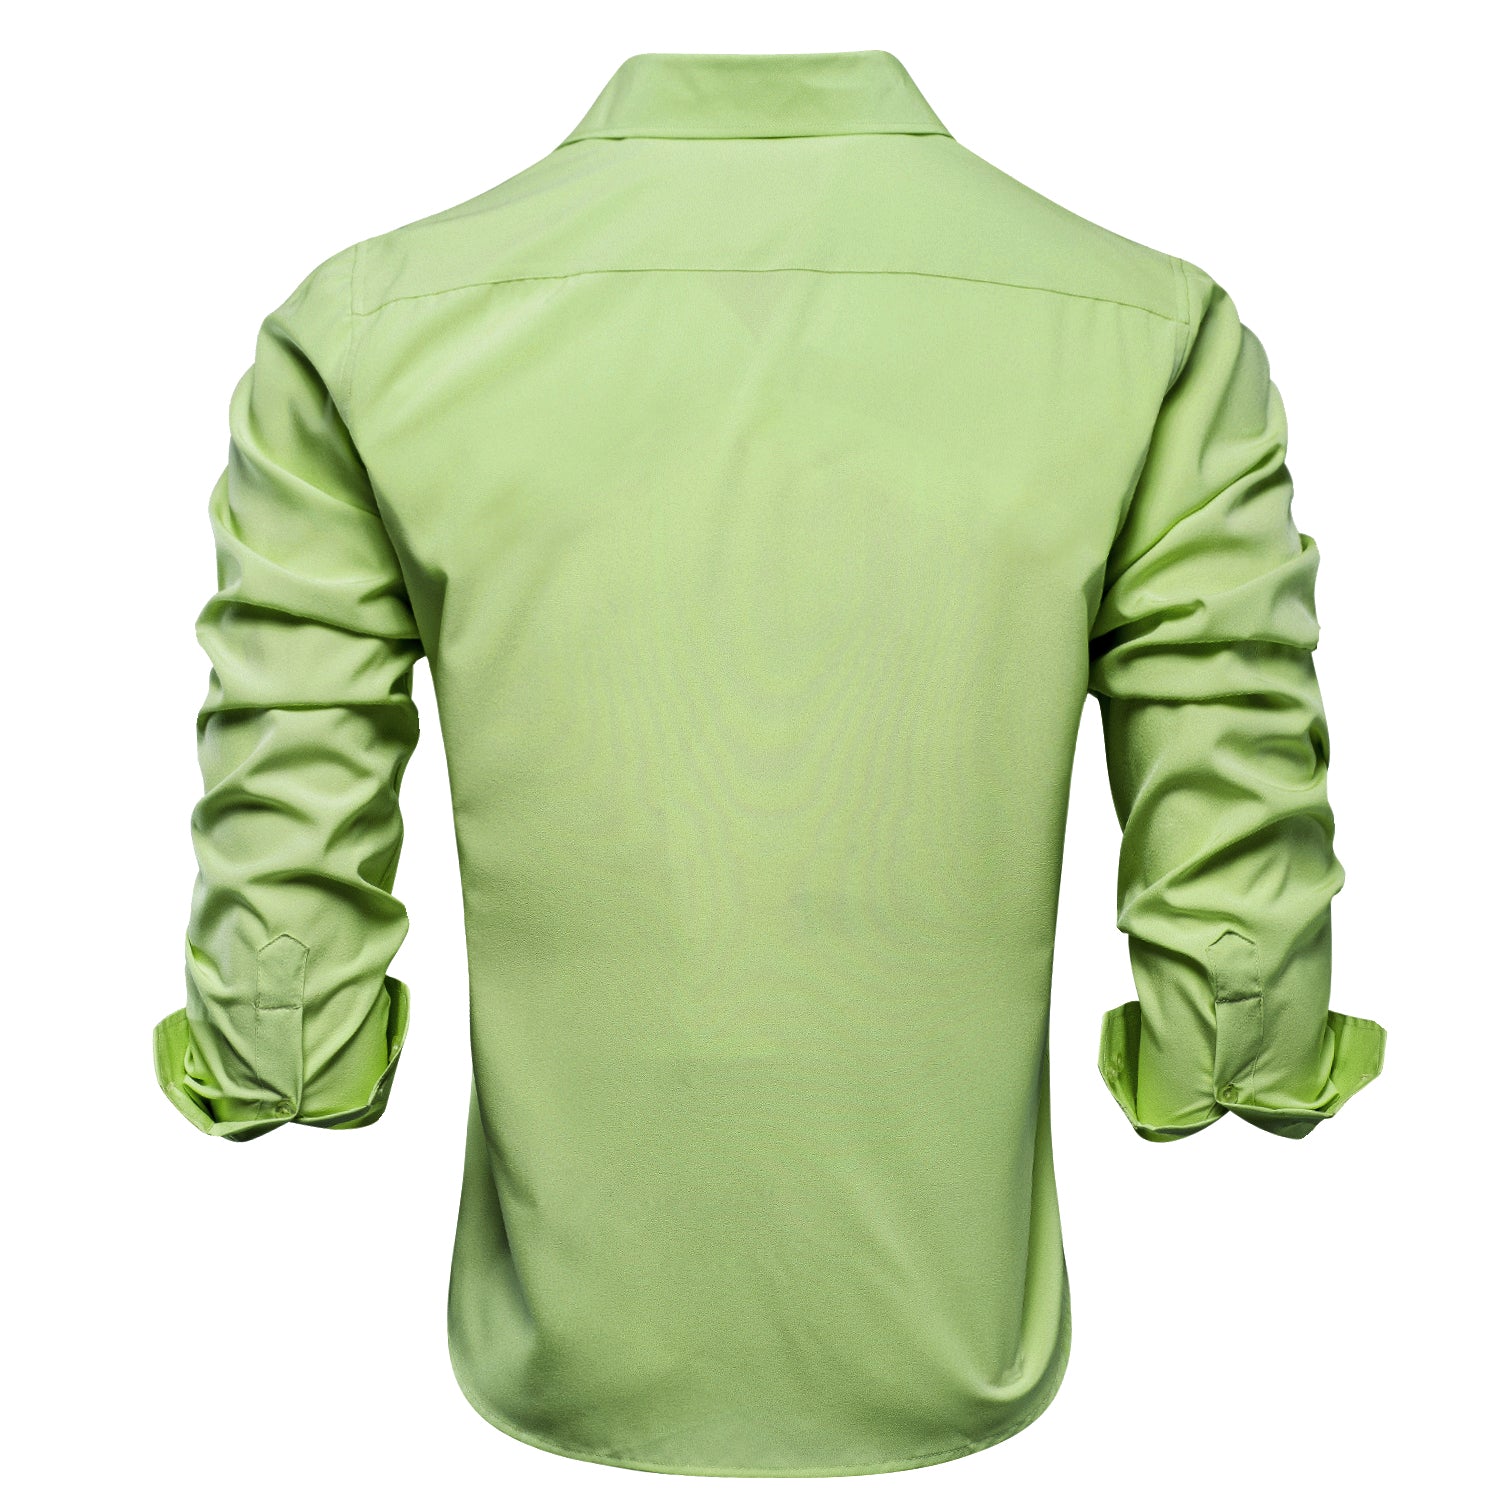 Apple Green Solid Stretch Men's Long Sleeve Shirt